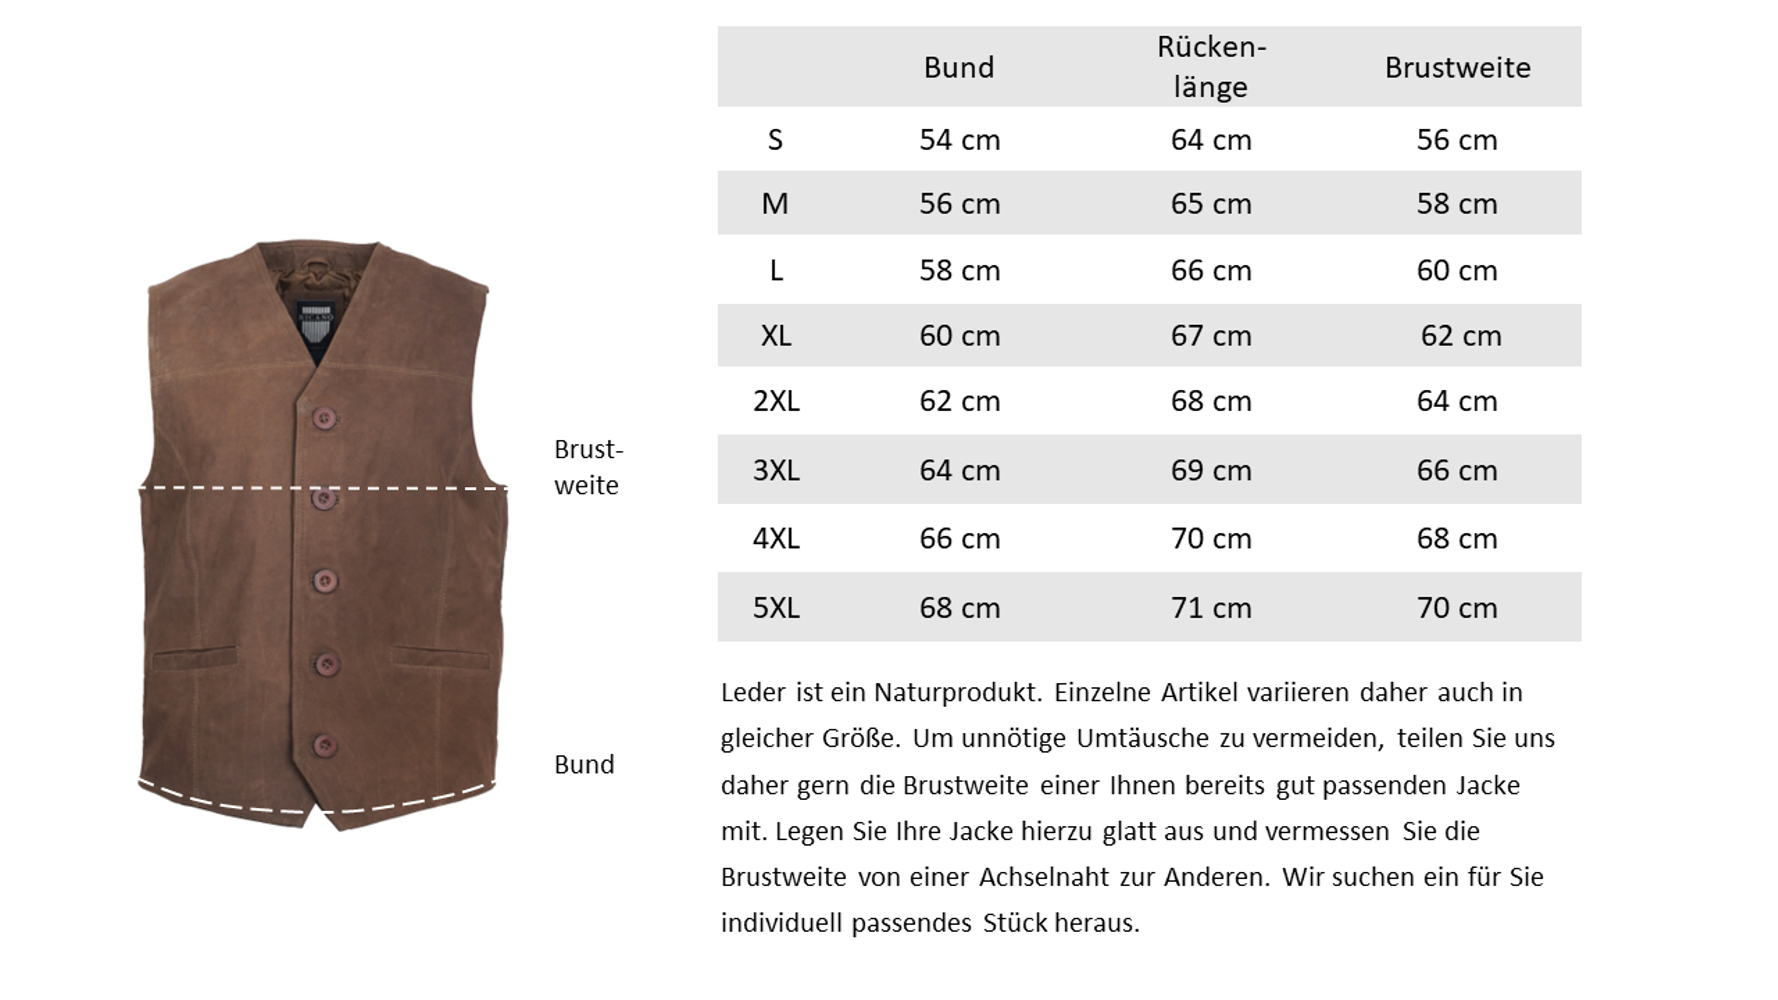 Men's leather vest Vest 321, medium brown (suede) in 6 colors, Bild 7